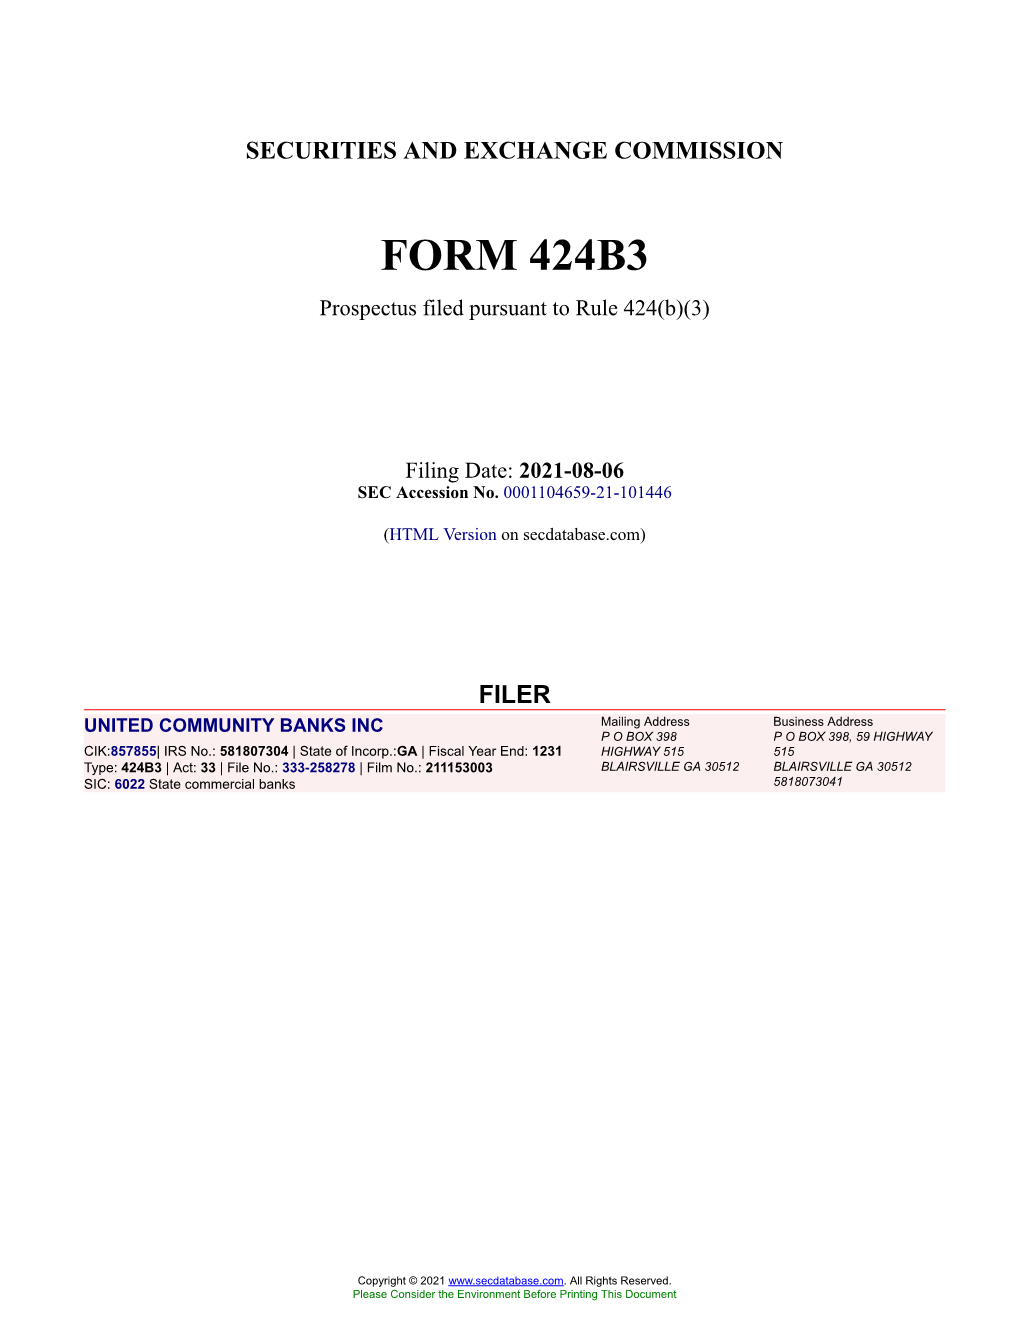 UNITED COMMUNITY BANKS INC Form 424B3 Filed 2021-08-06